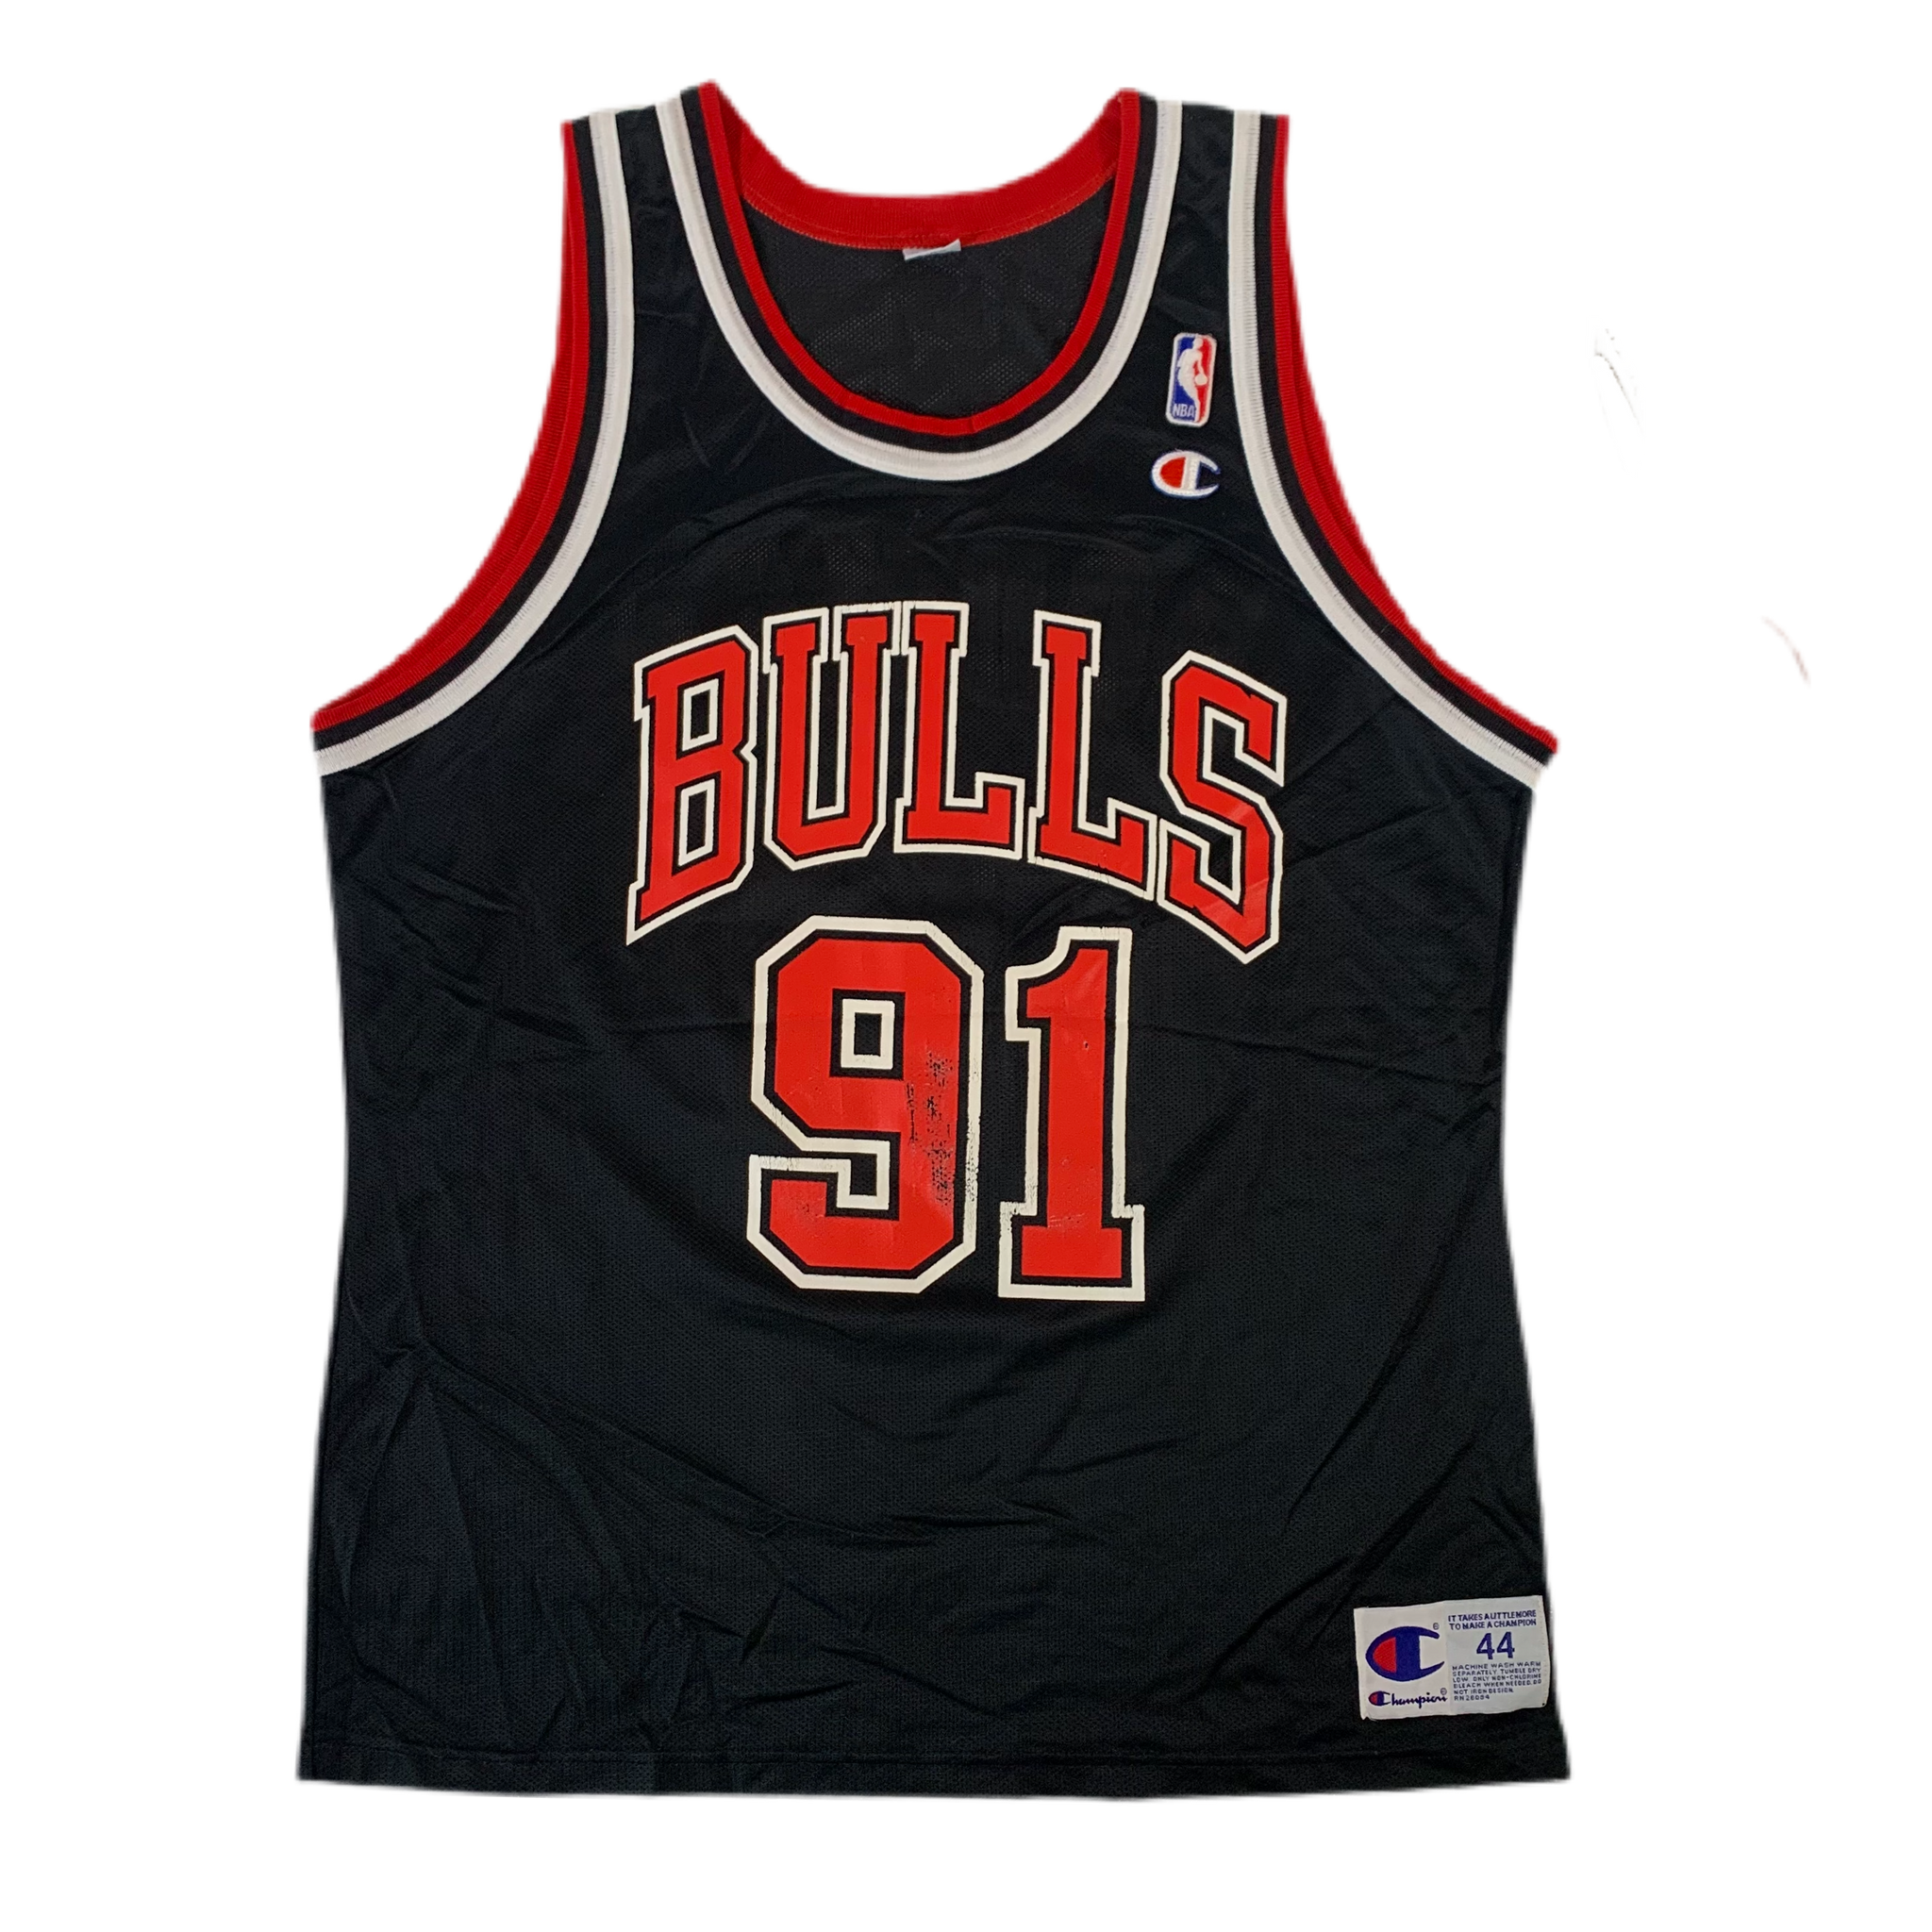 VTG Champion Dennis Rodman Chicago Bulls Jersey 91 Red 